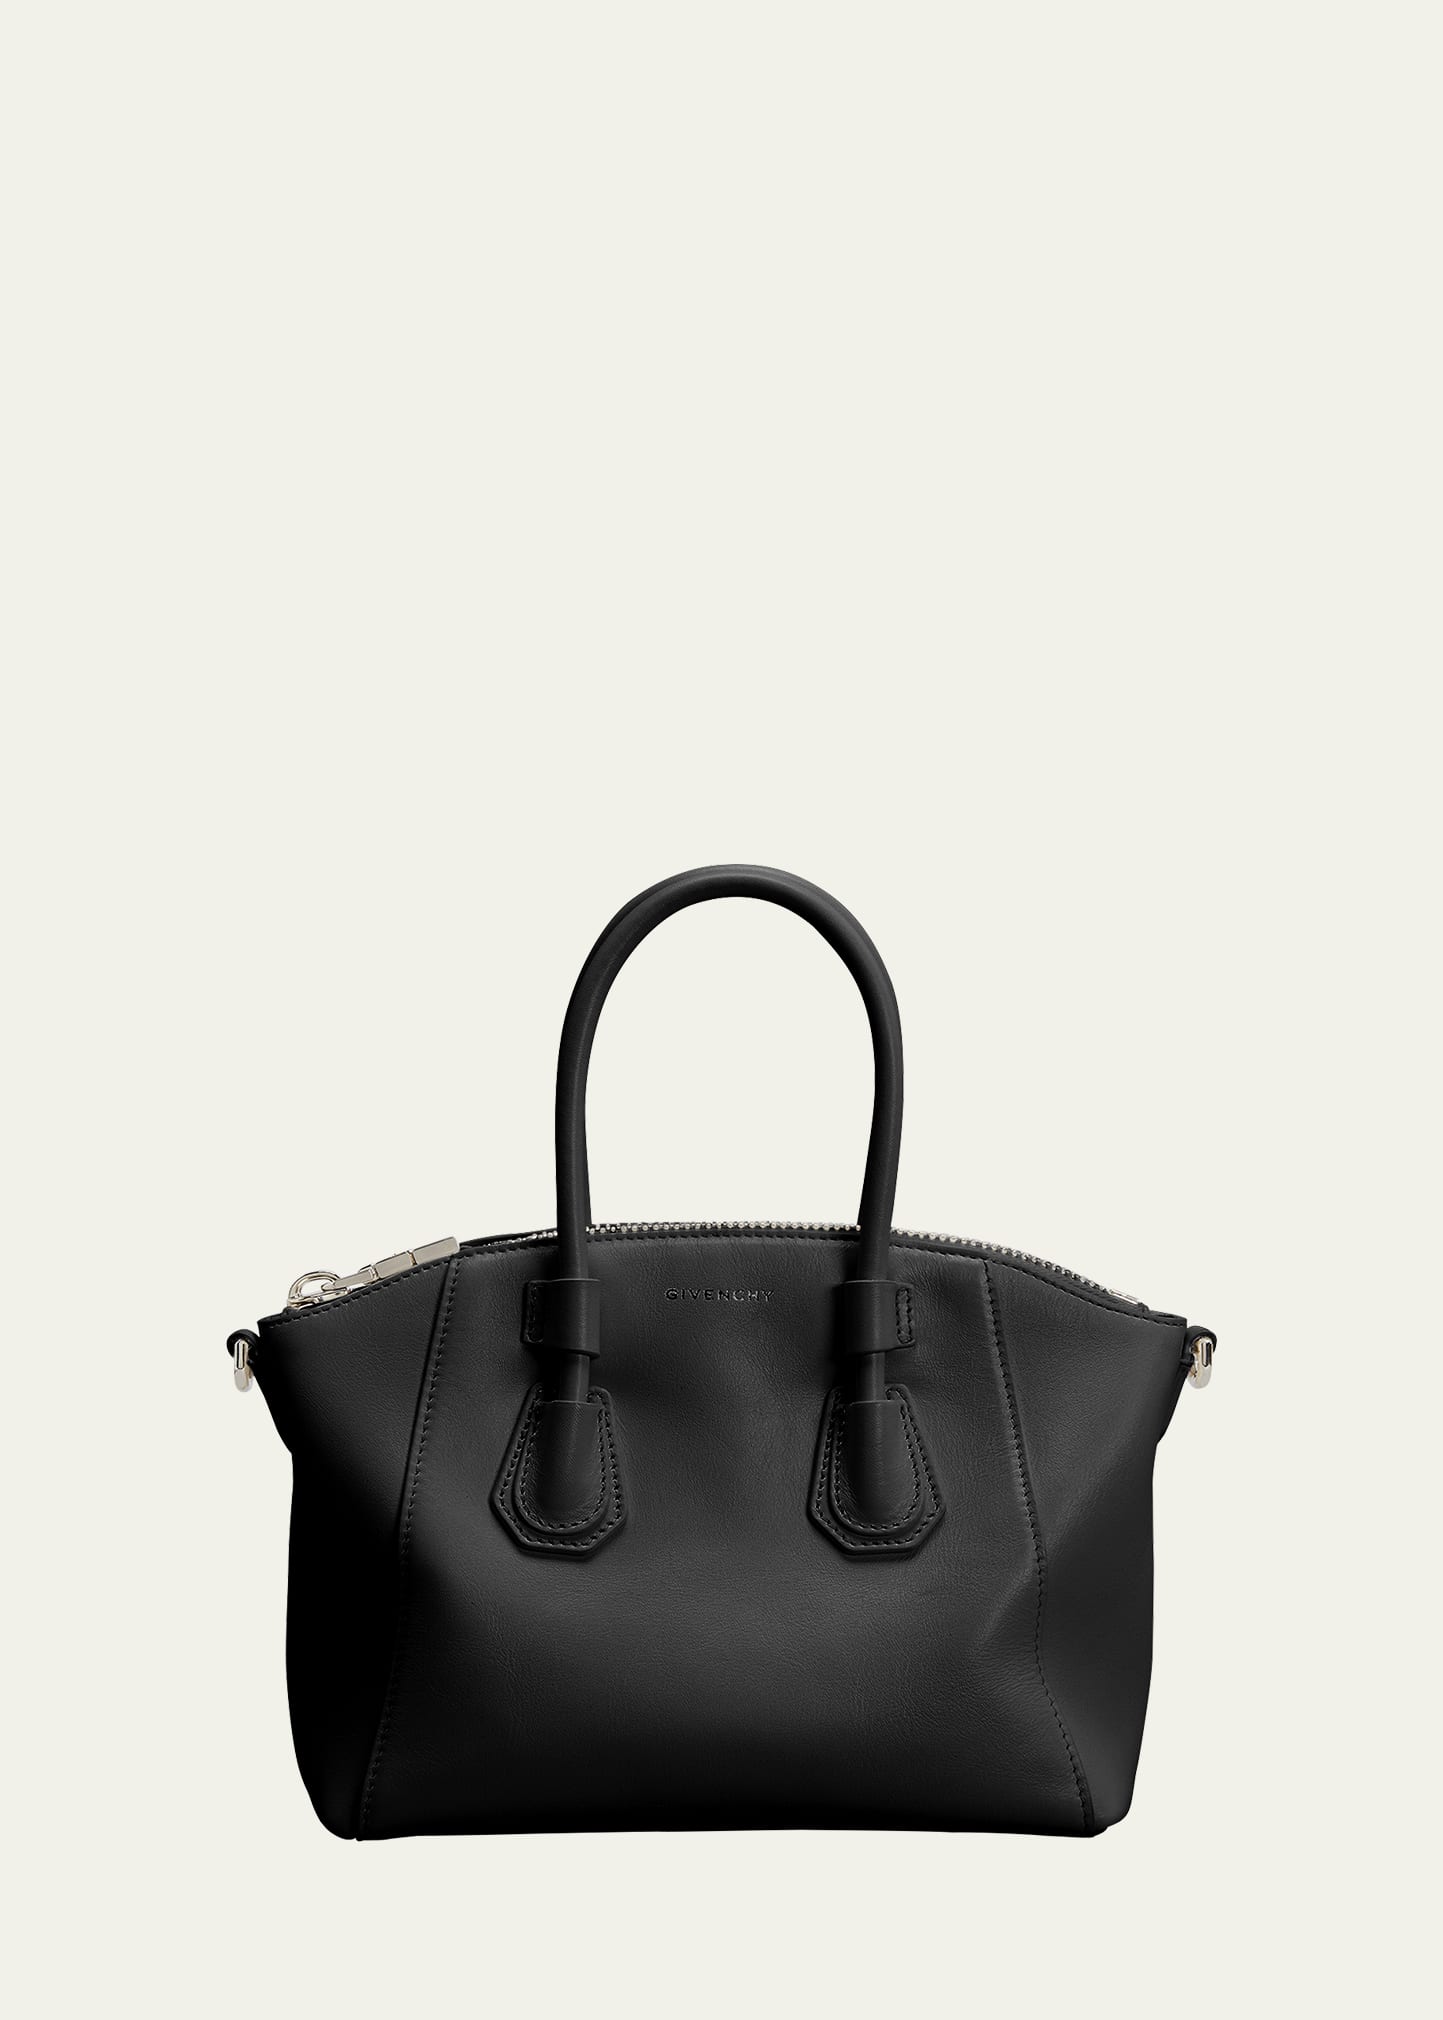 How Antigona and Pandora Became Givenchy's Most Iconic Bags